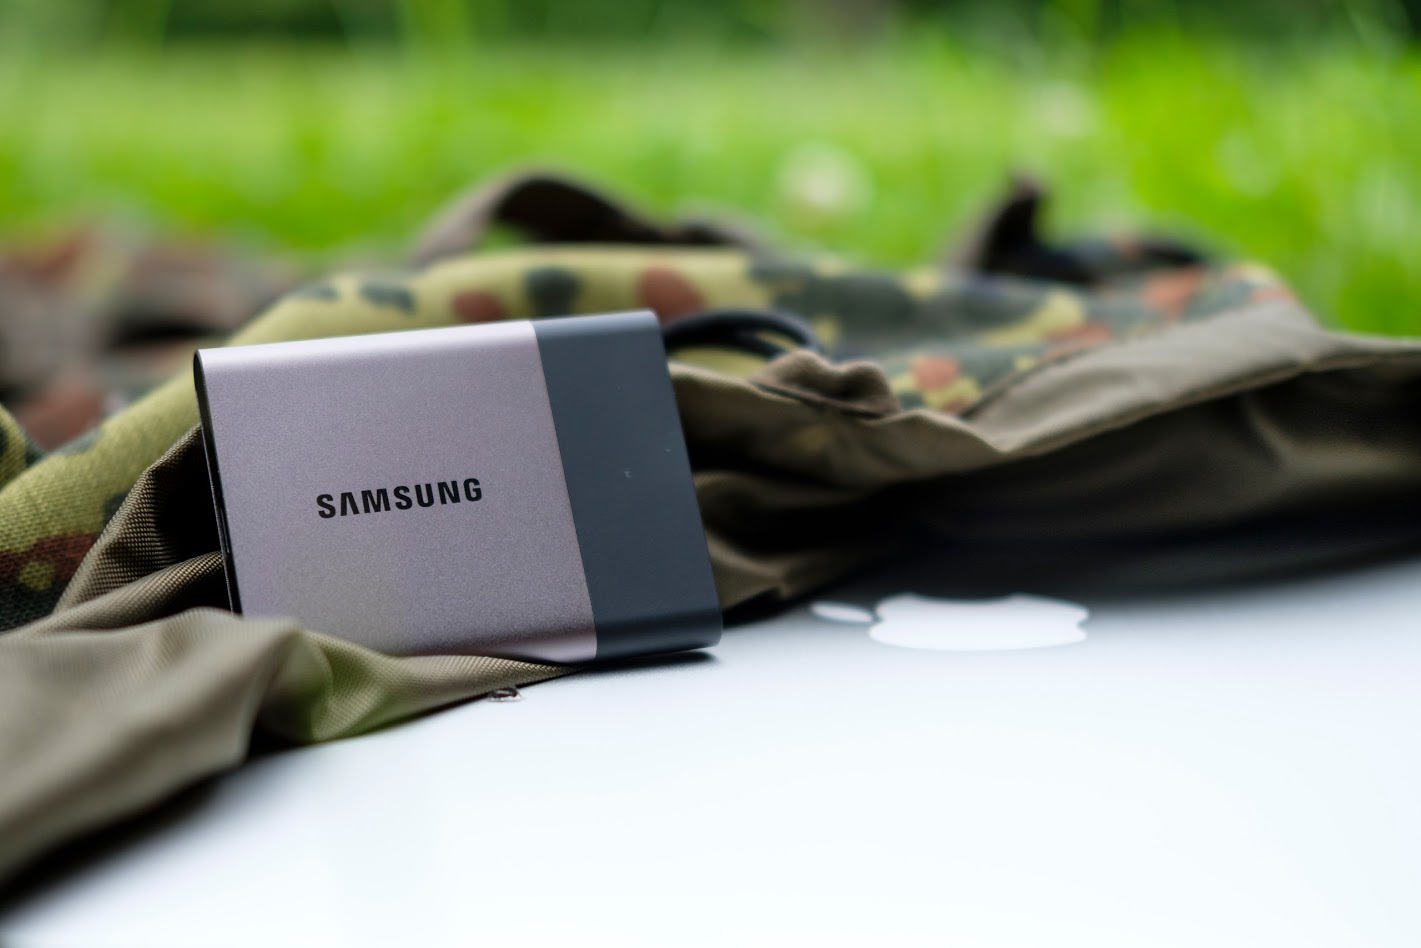 Samsung Portable SSD T3 - Lesertest Nils W. Im Feld